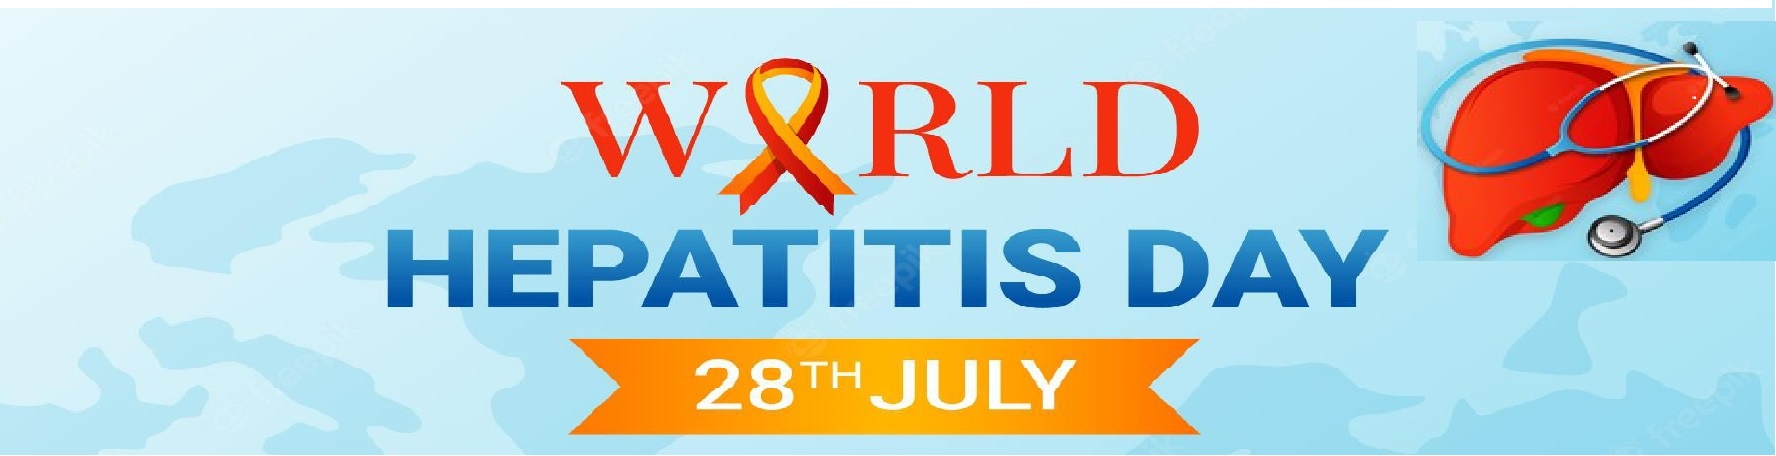 Hepatitisday28thjuly2